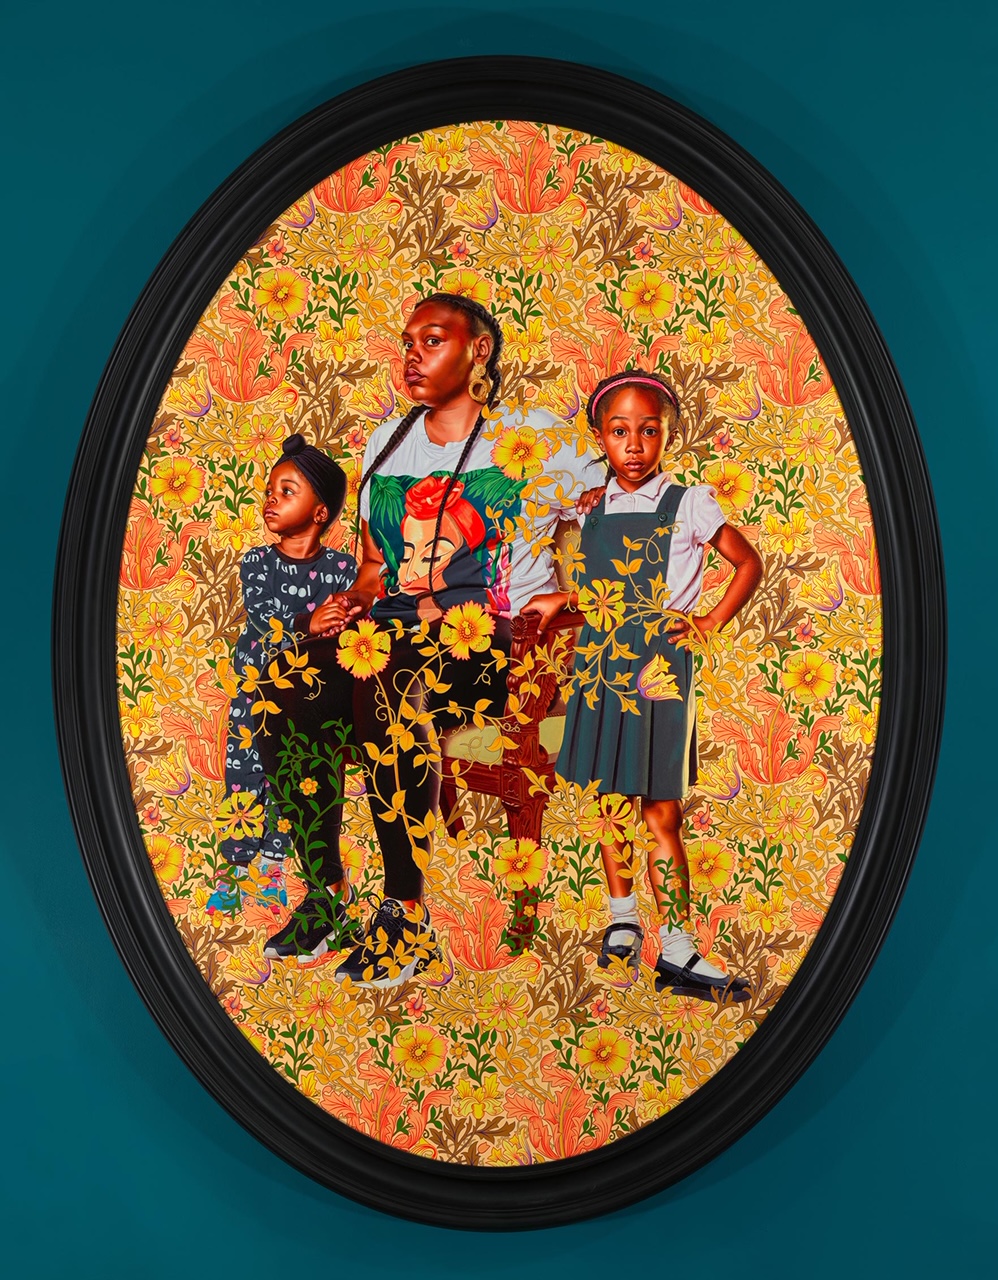 kehindewiley_the yellow wallpaper_Portrait of Asia-Imani, Gabriella-Esnae, and Kaya Palmer